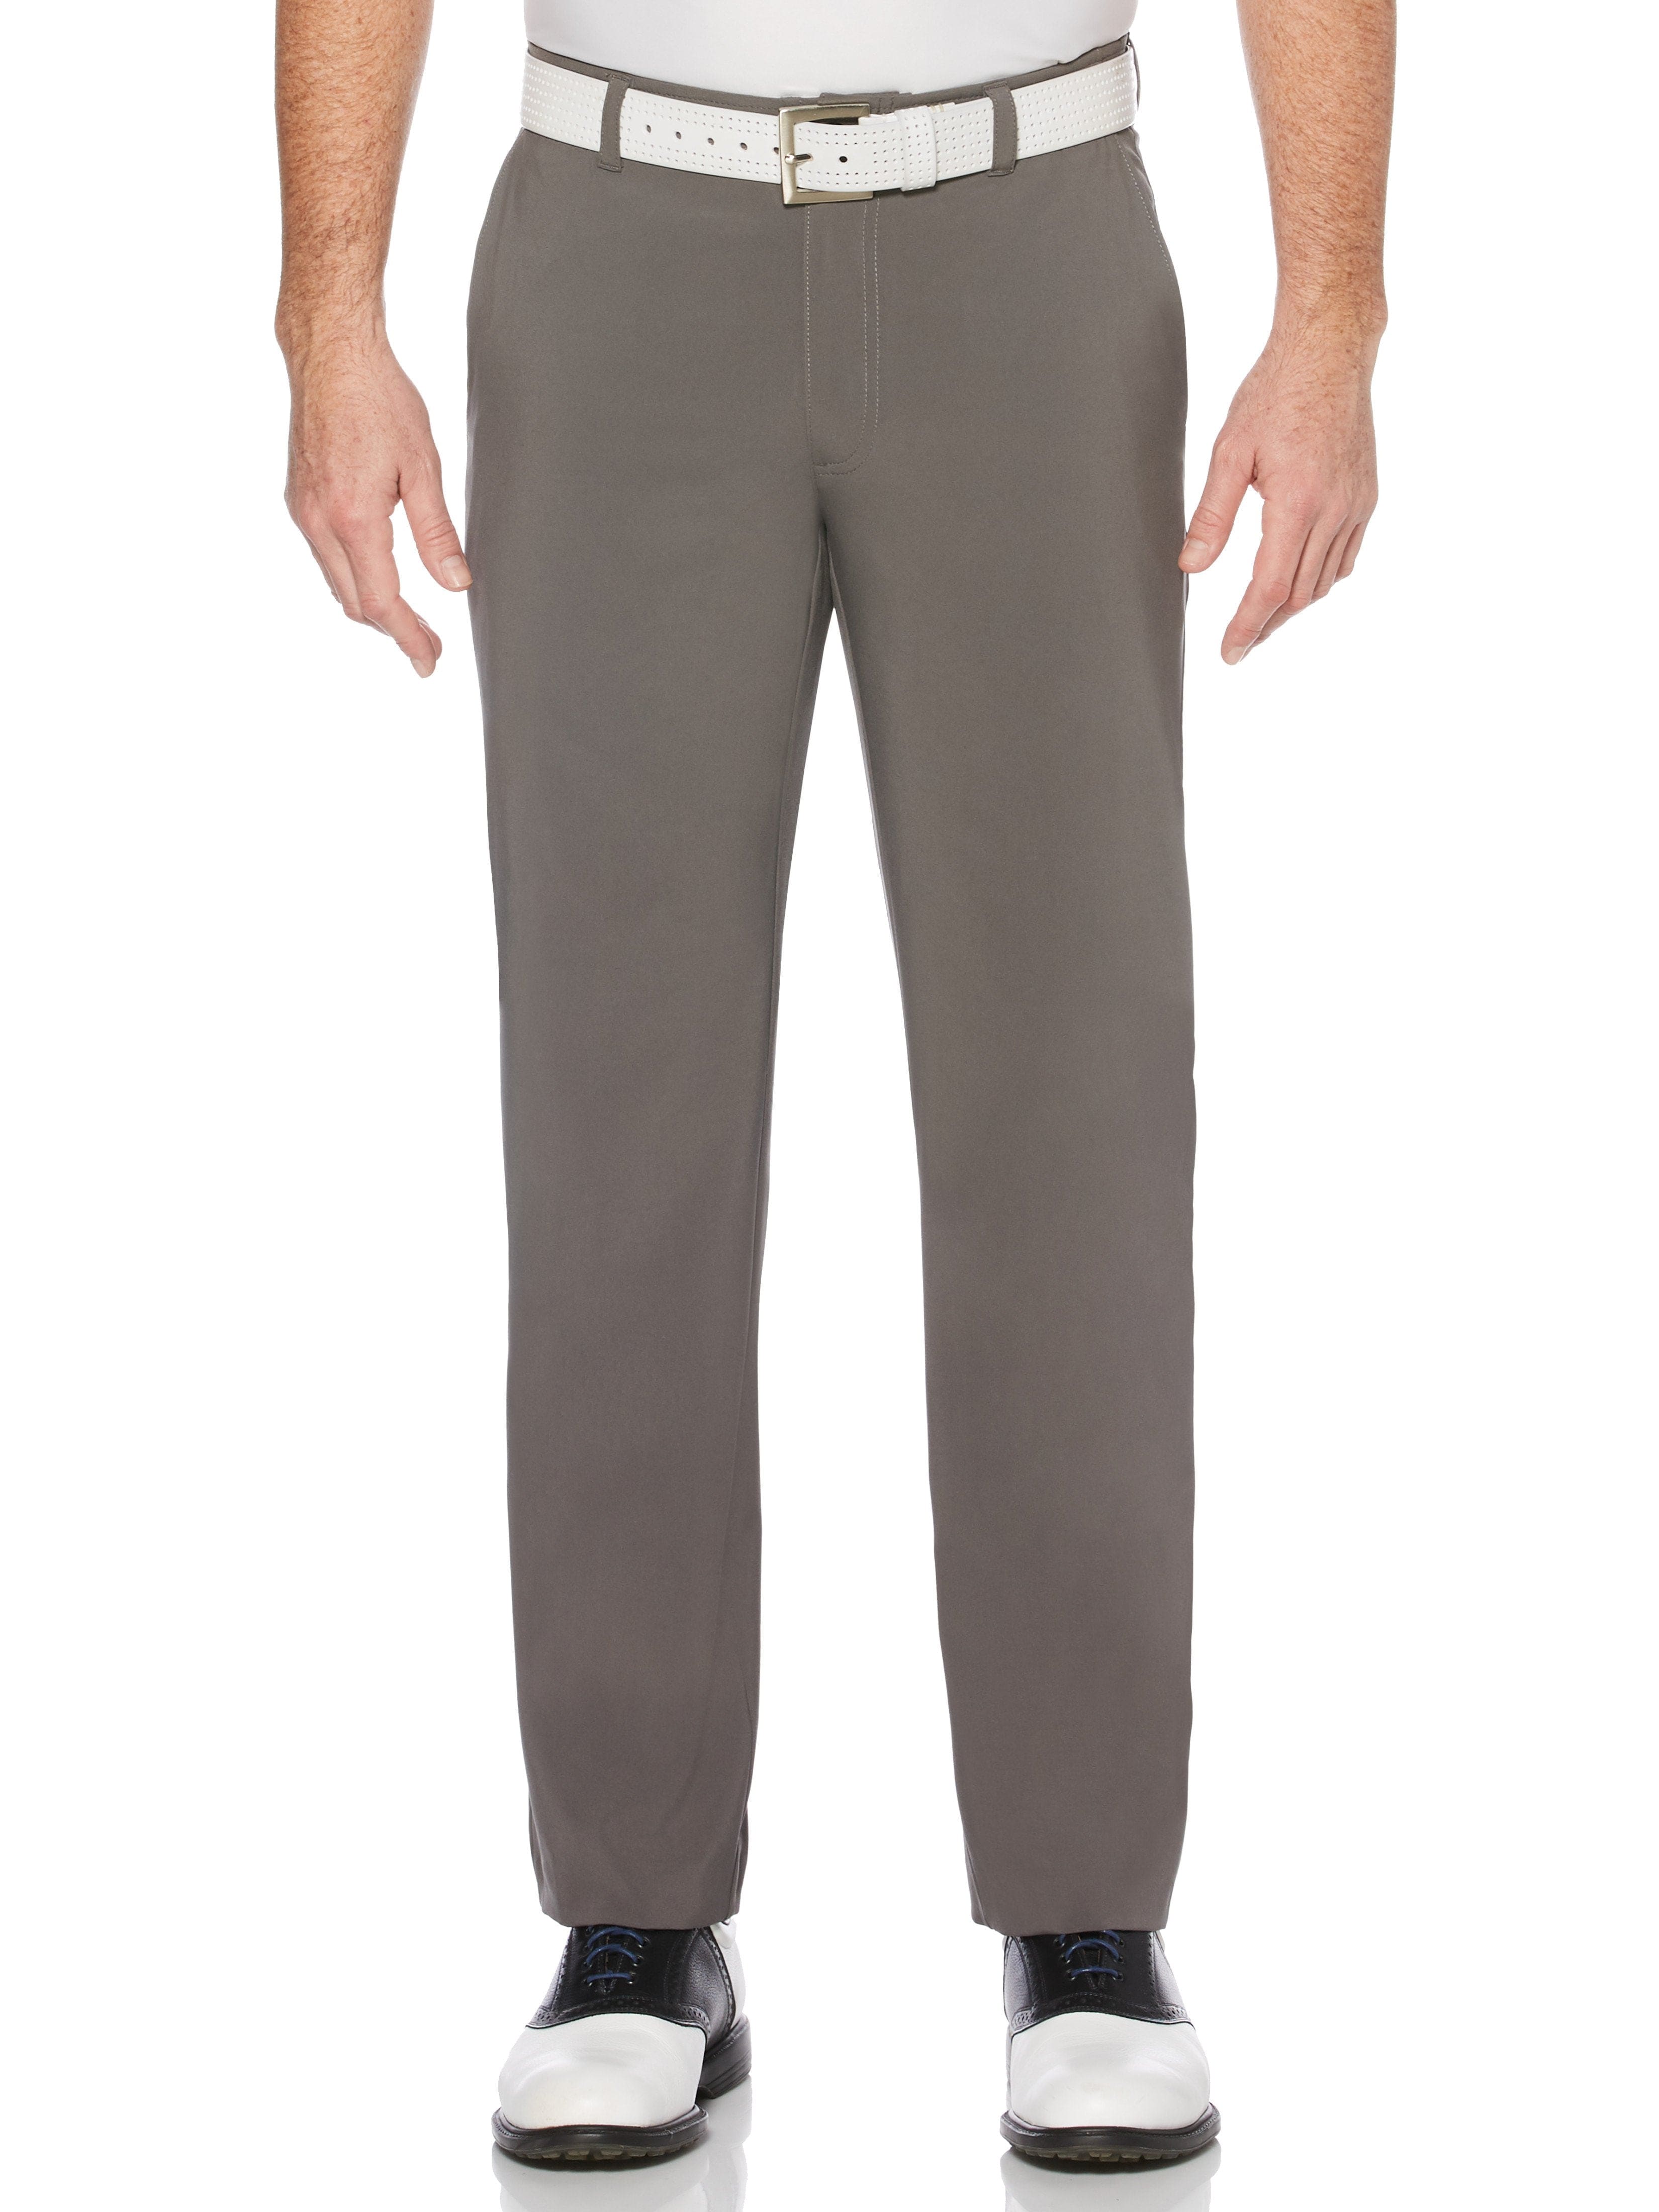 Jack Nicklaus Mens Flat Front Active Flex Pants, Size 34 x 32, Iron Gate Gray, Polyester/Elastane | Golf Apparel Shop